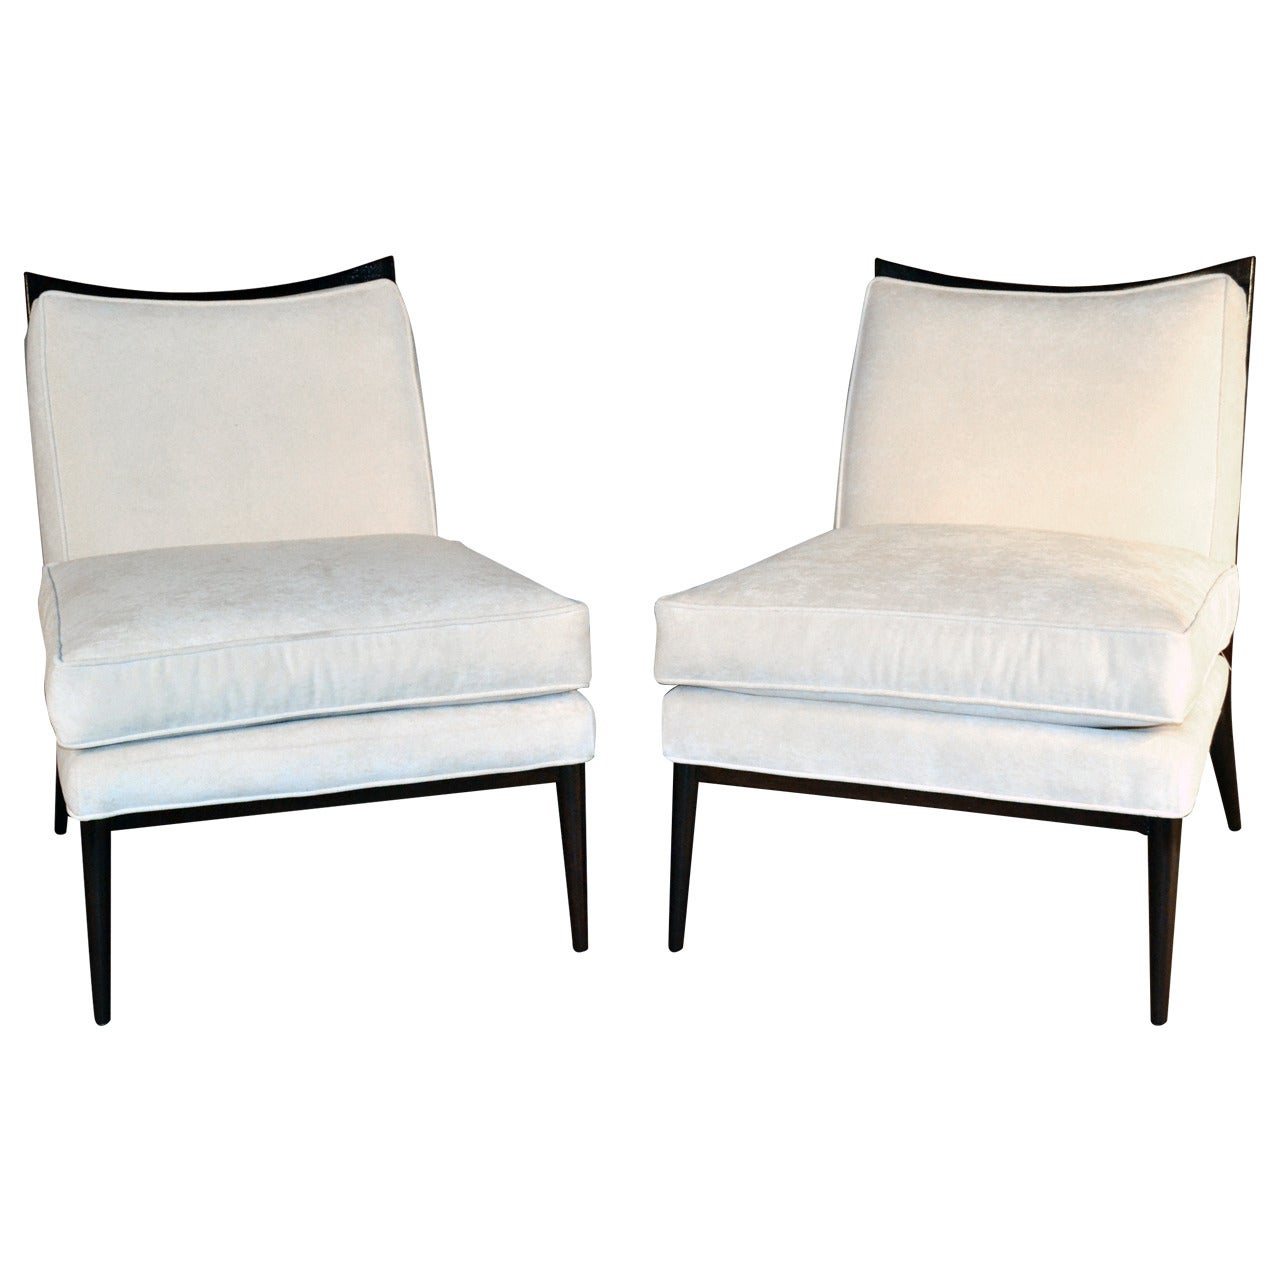 Pair of Paul McCobb Armless Lounge Chairs